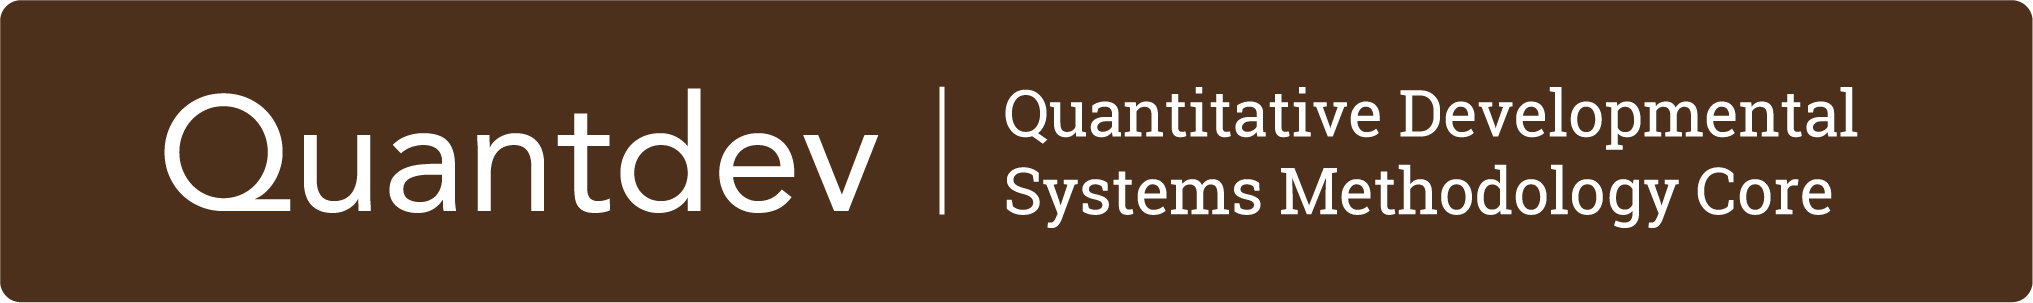 Quantdev | Quantitative Developmental Systems Methodology Core